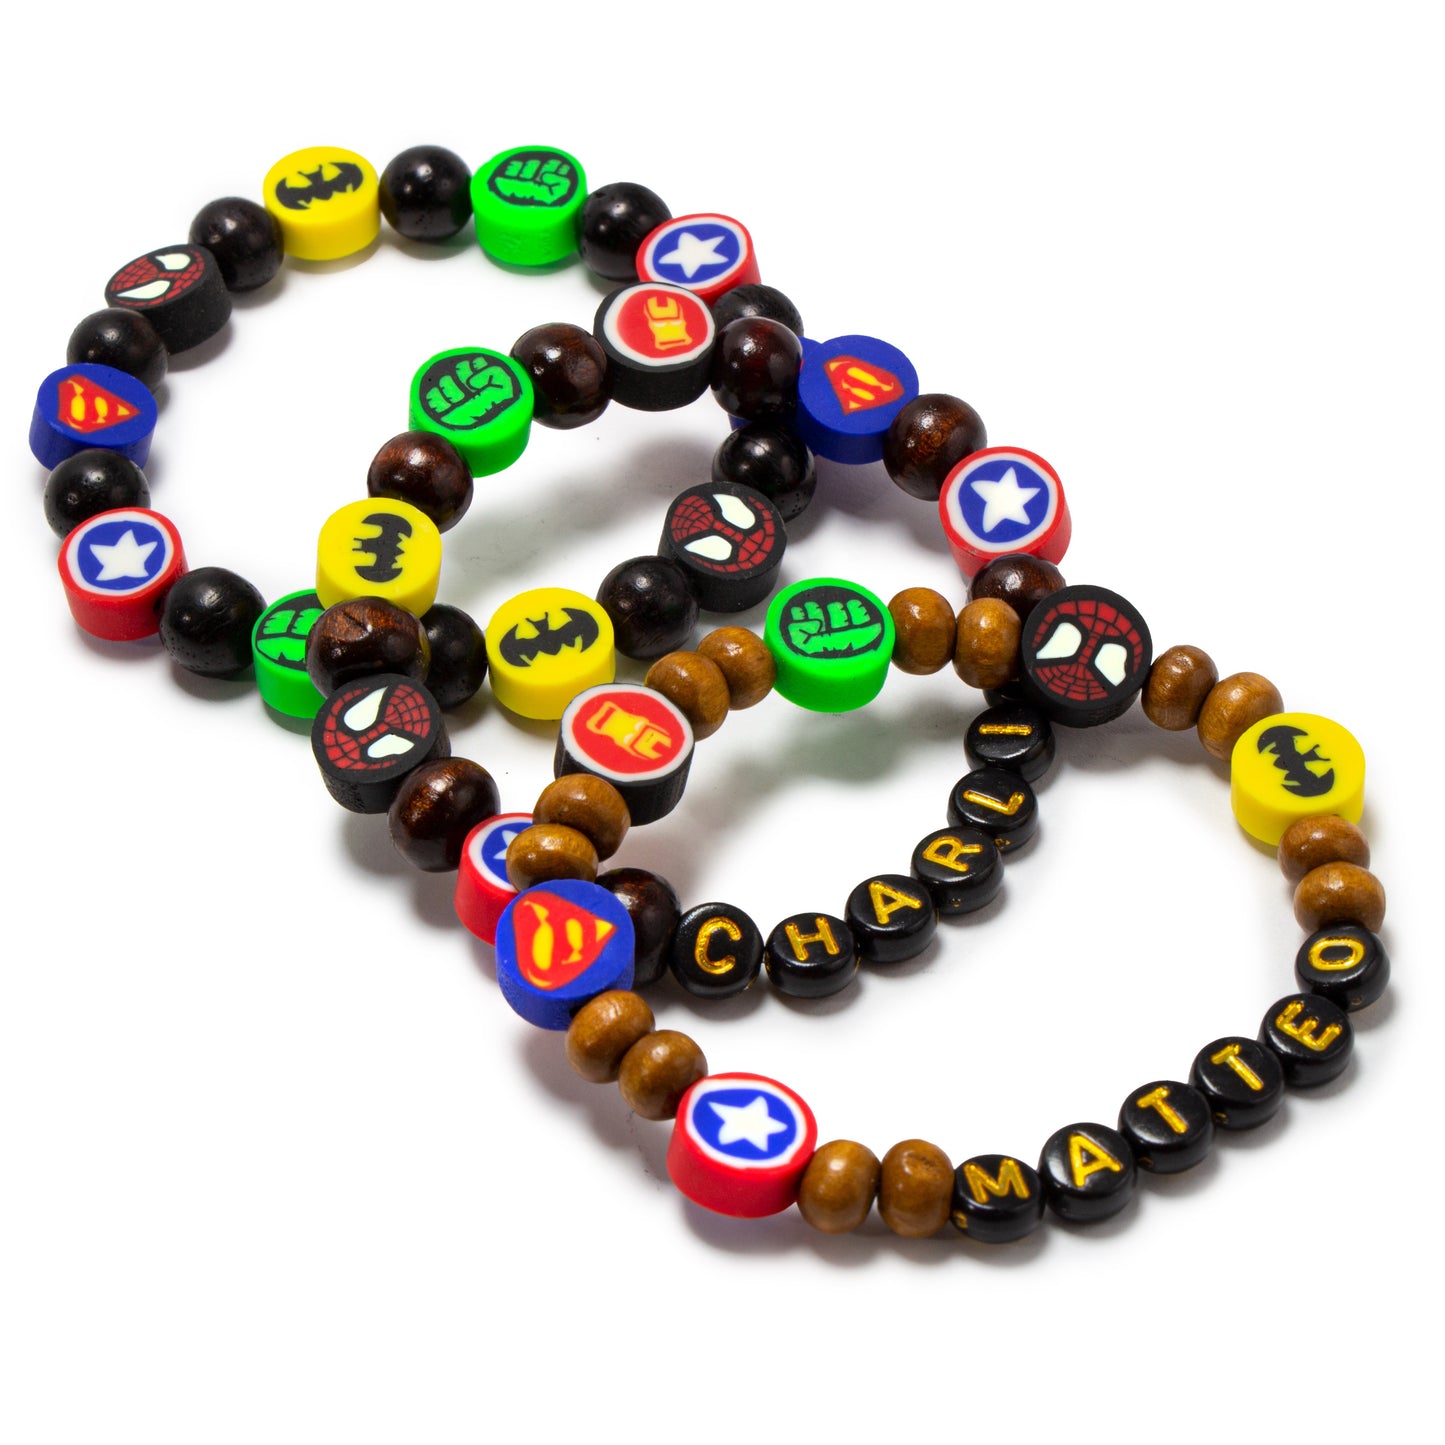 Superheroes kids bracelet / Wooden masculine bracelet